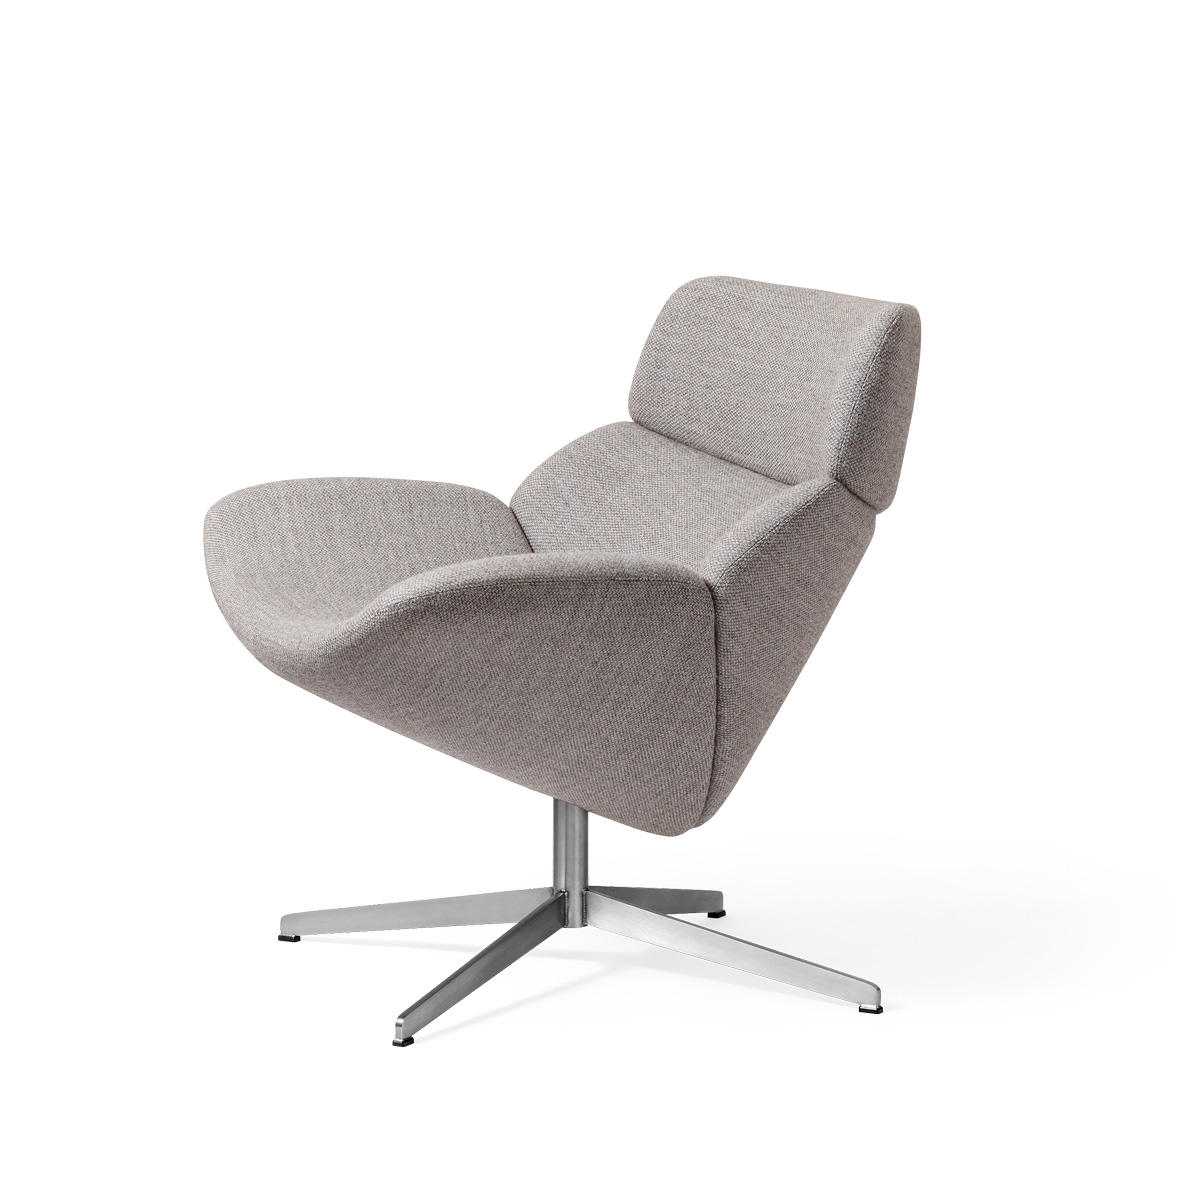 Model 4910 Askoe Chair